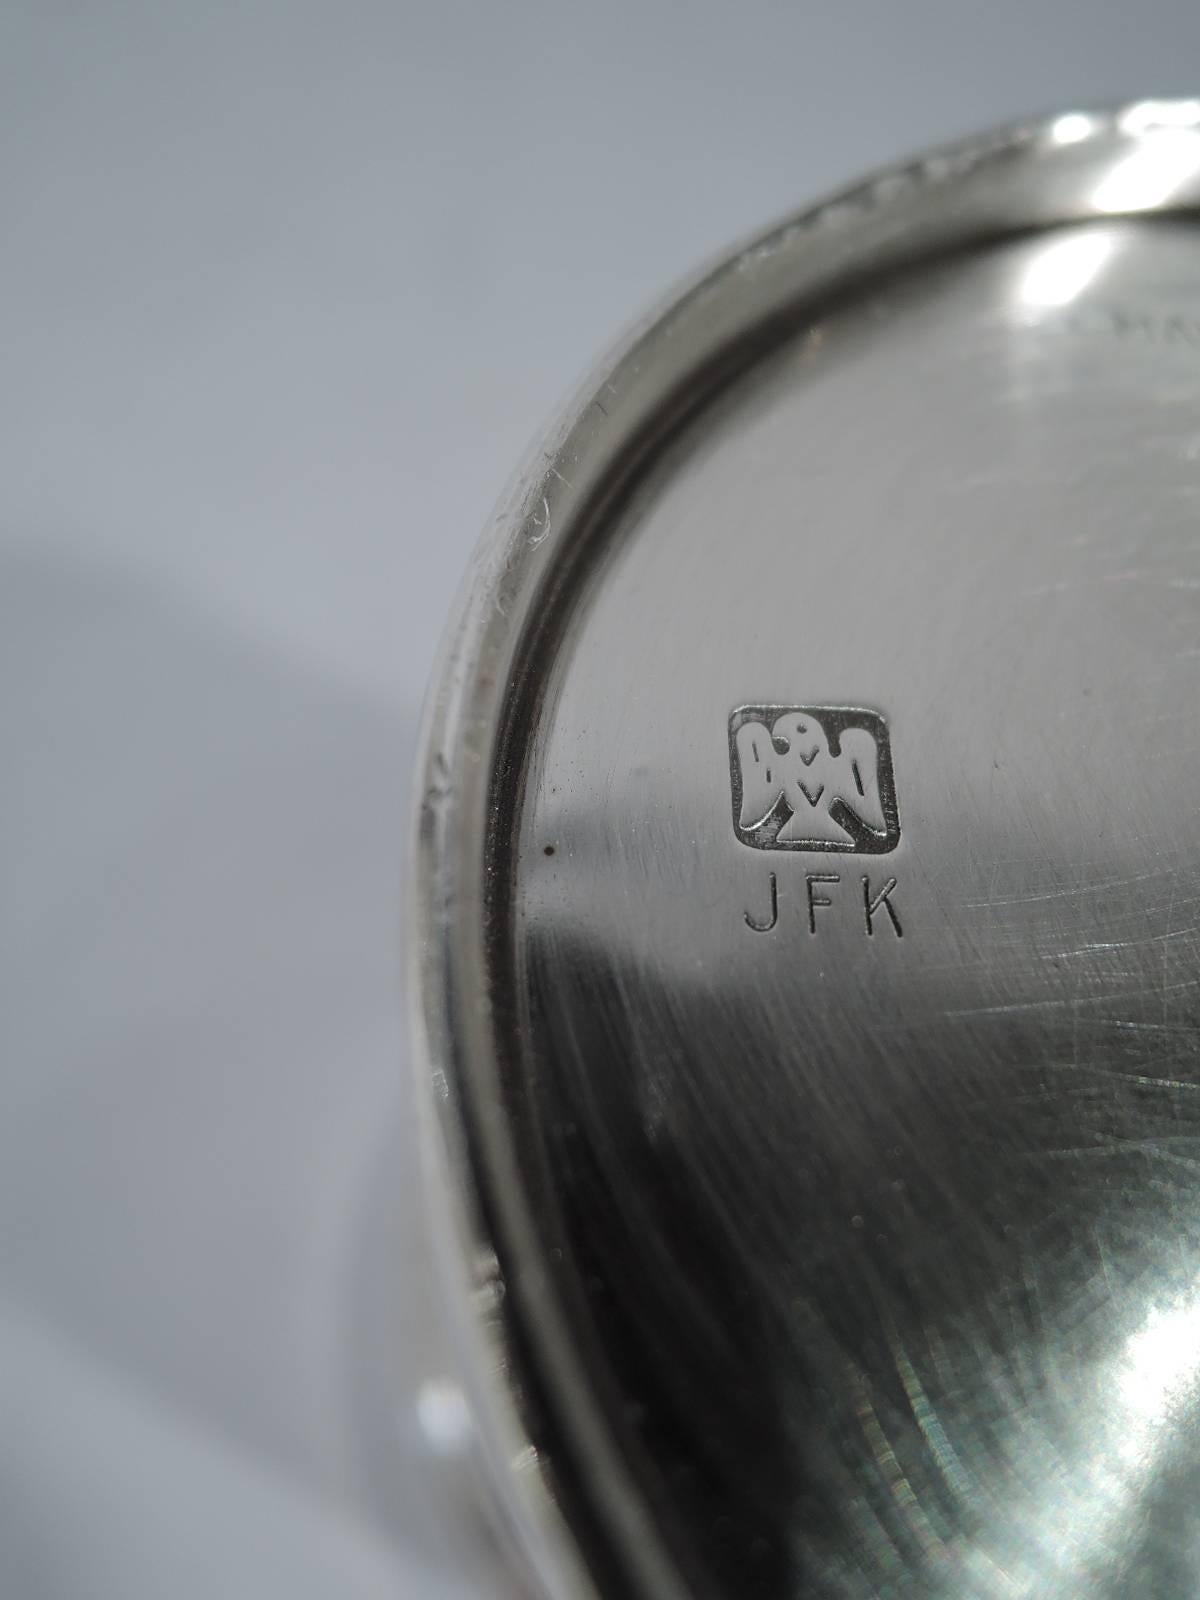 American Rare JFK Era Sterling Silver Mint Julep Cup by Scearce of Kentucky